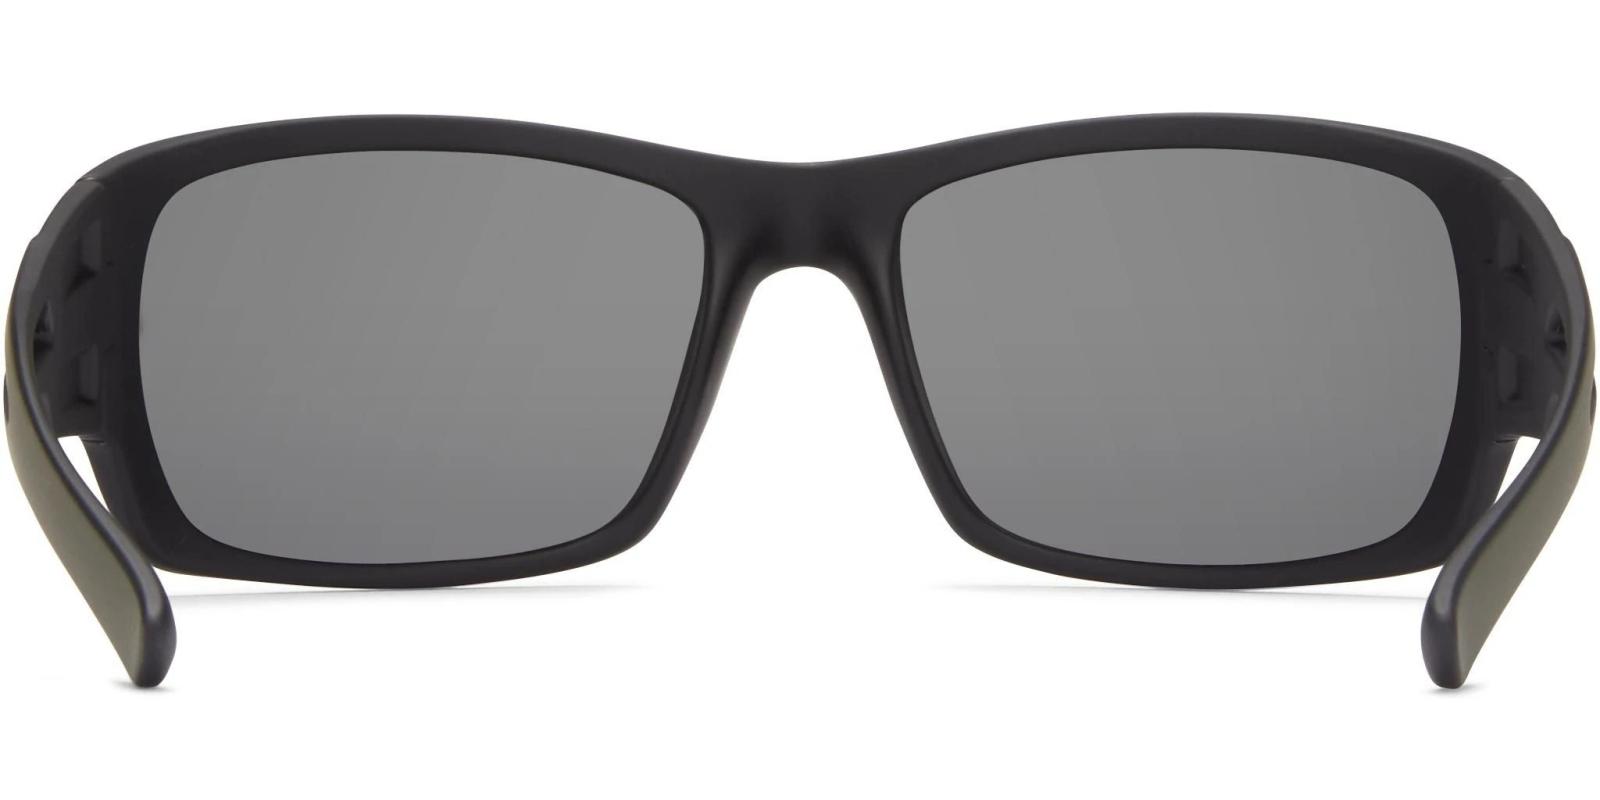 icu Eyewear Hazard Sunglasses